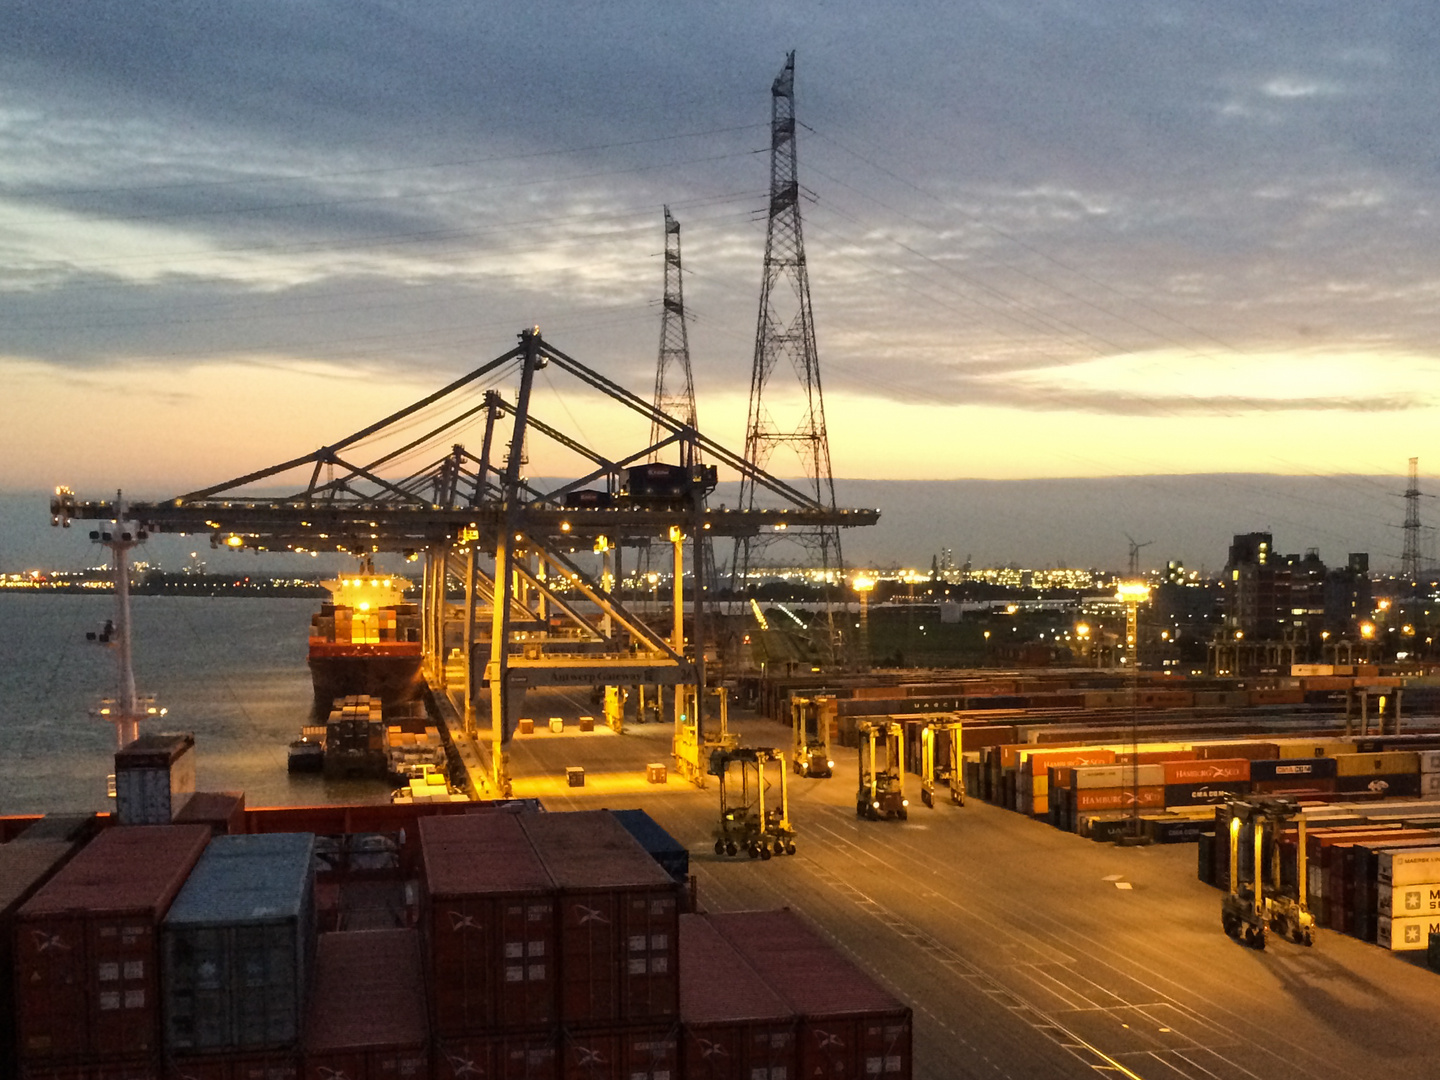 Containerterminal Amsterdam, 2014